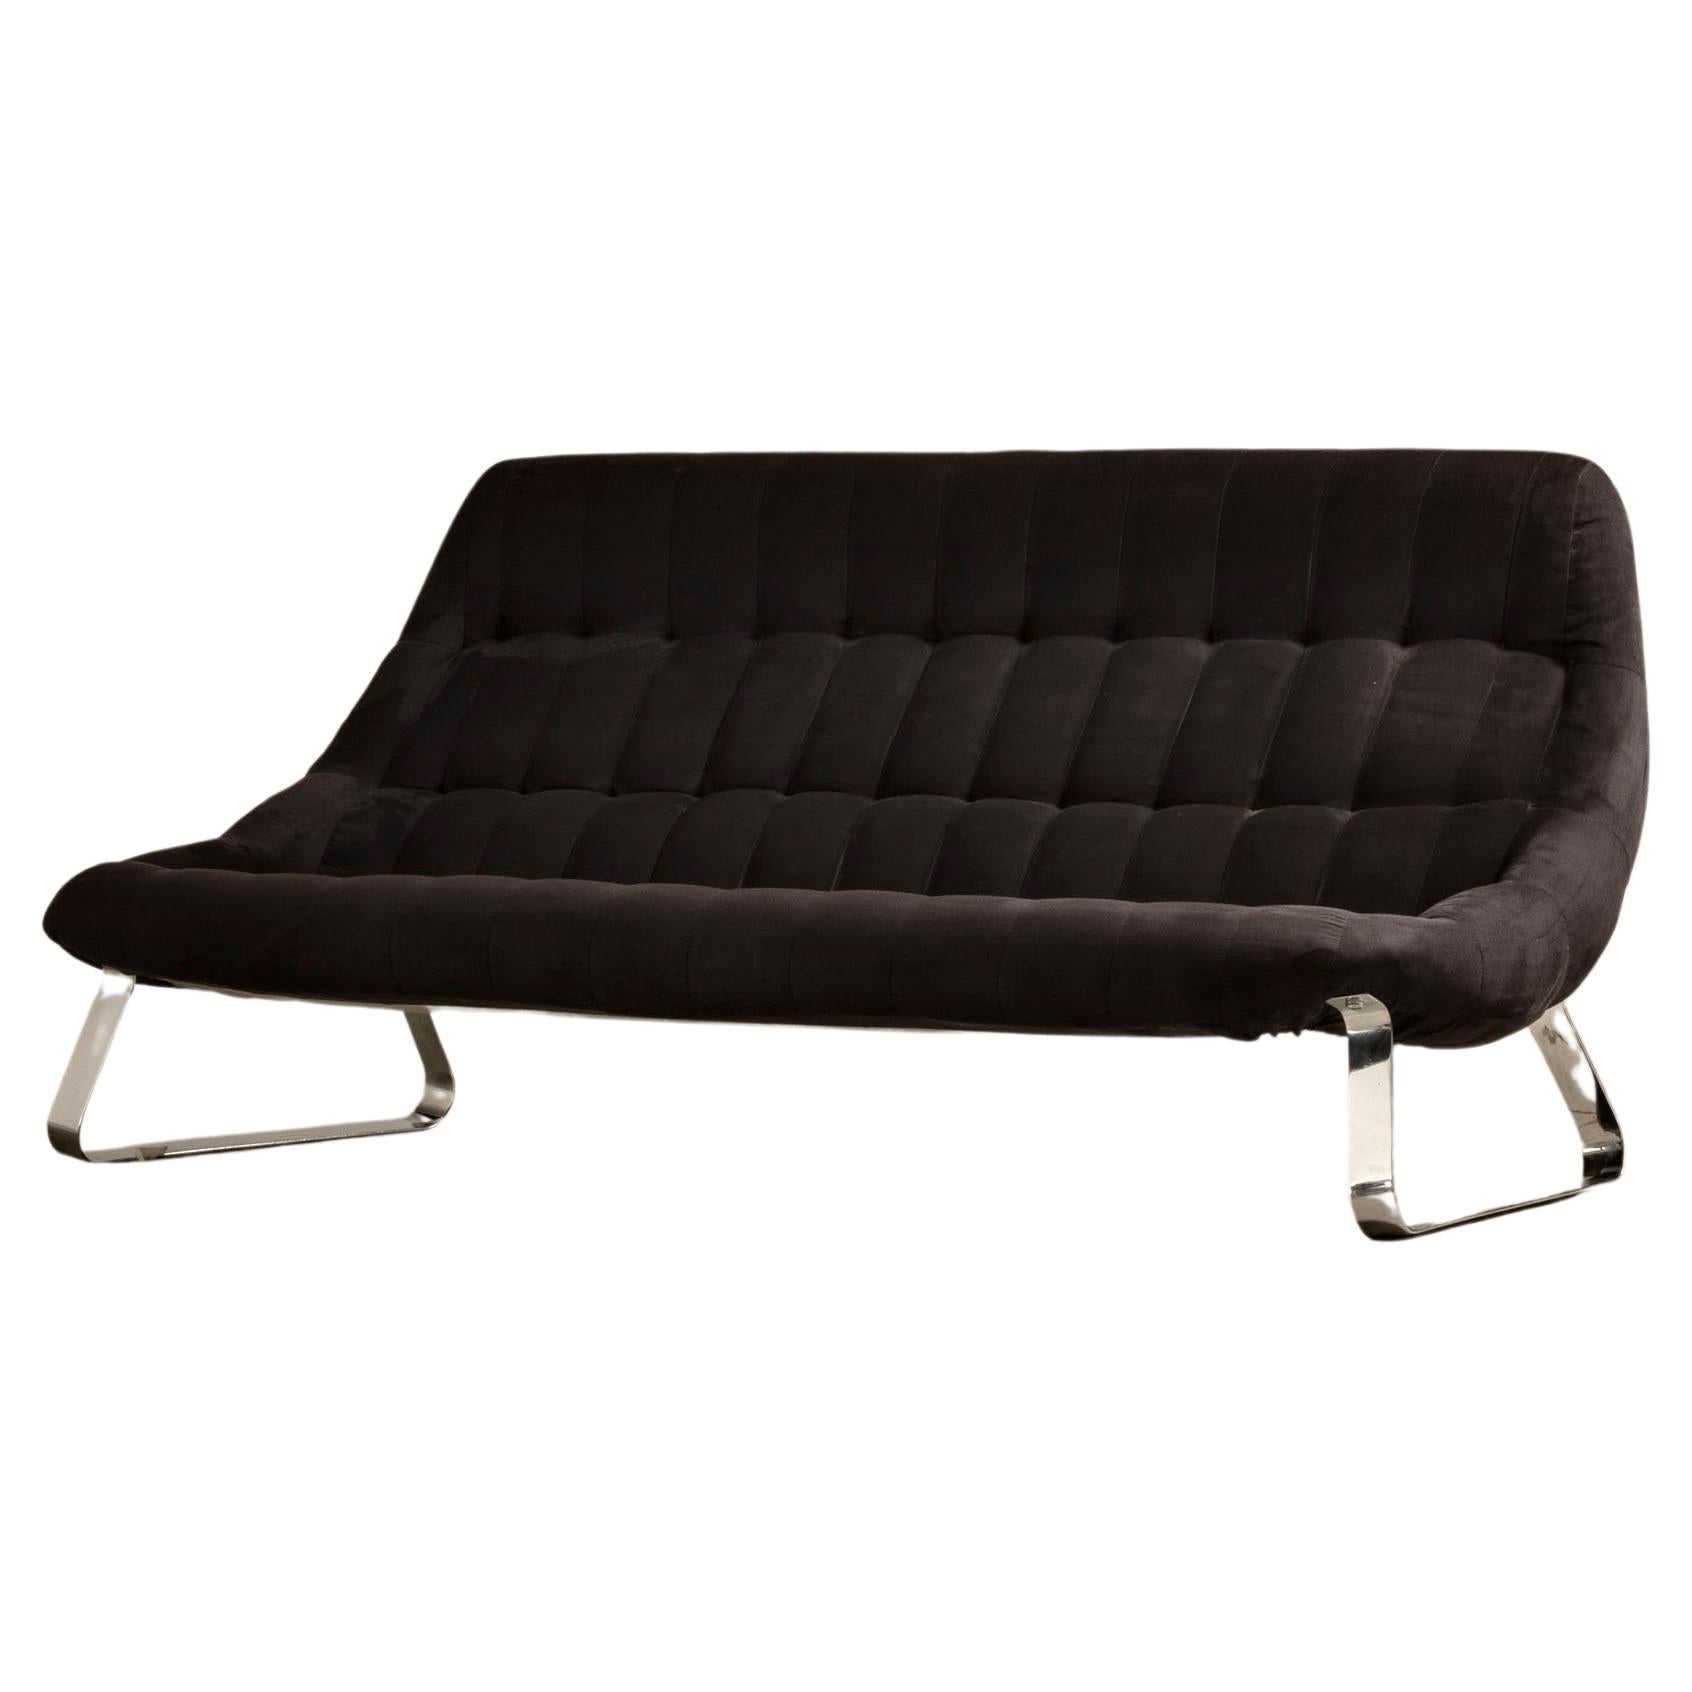 Sofa MP-163, by Percival Lafer, Brazilian Mid-Century Modern Design For Sale